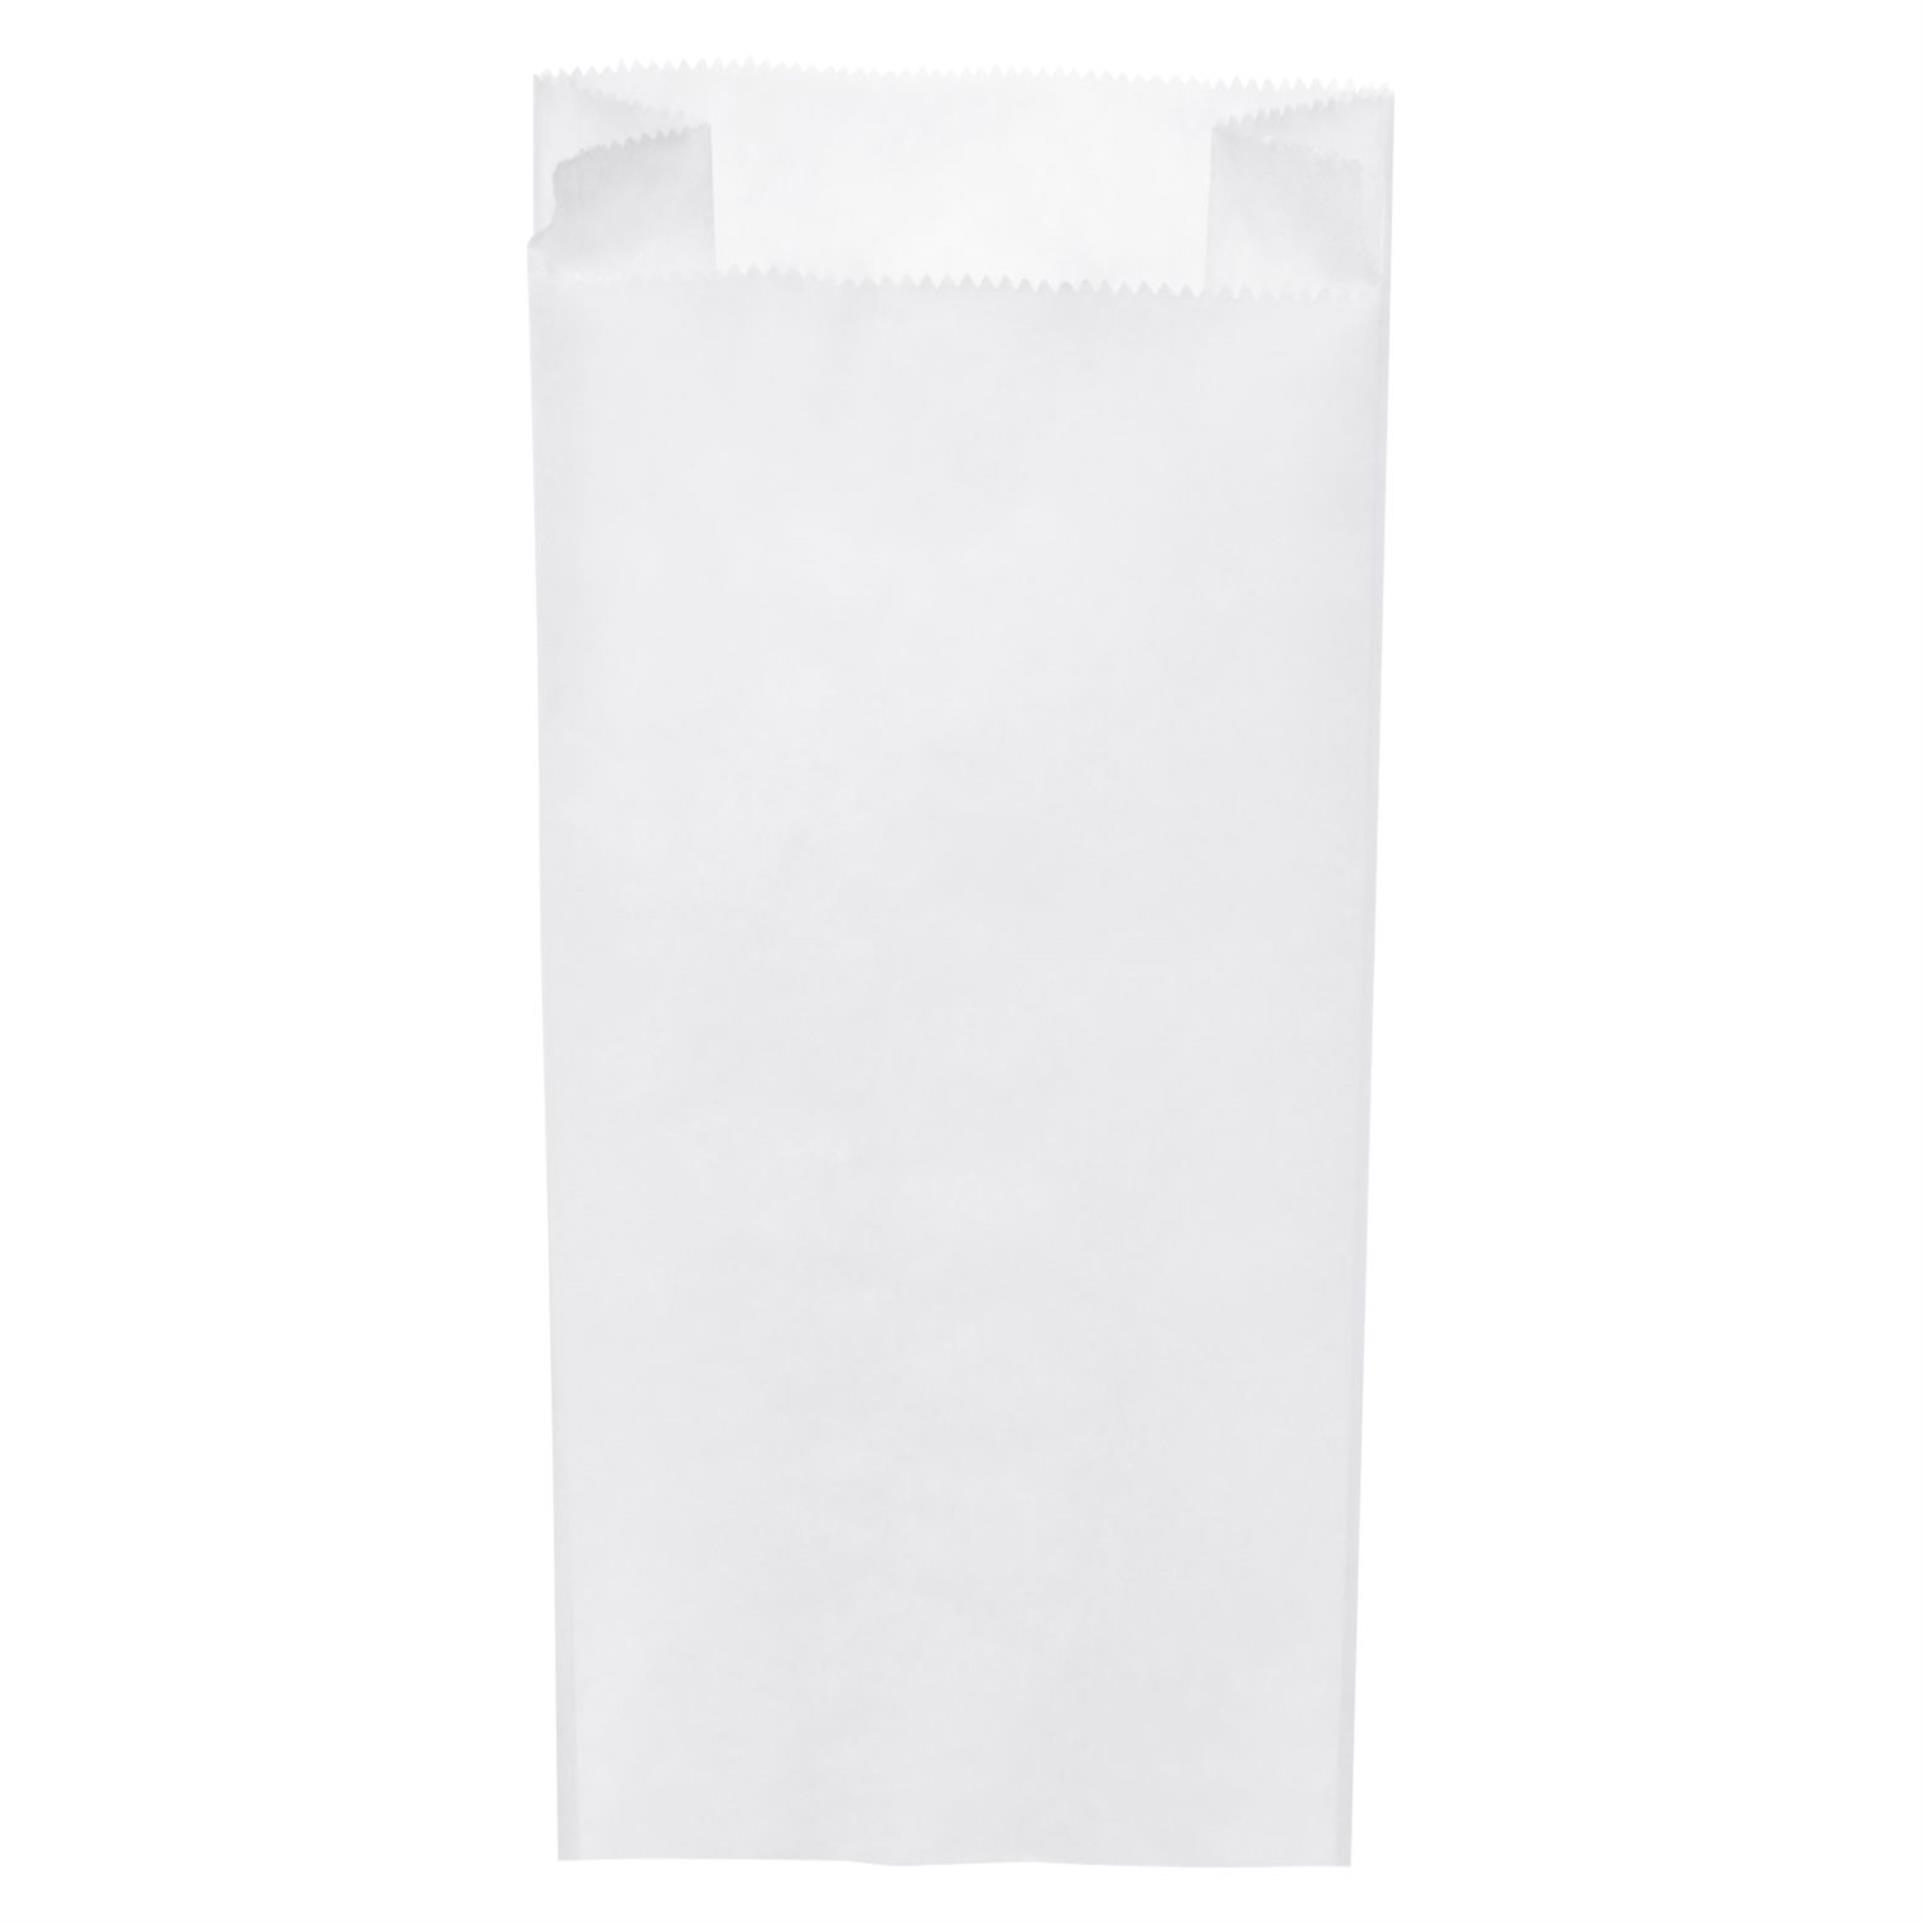 Svačinový sáček - papírový, 12 + 4 x 24 cm, 100 ks